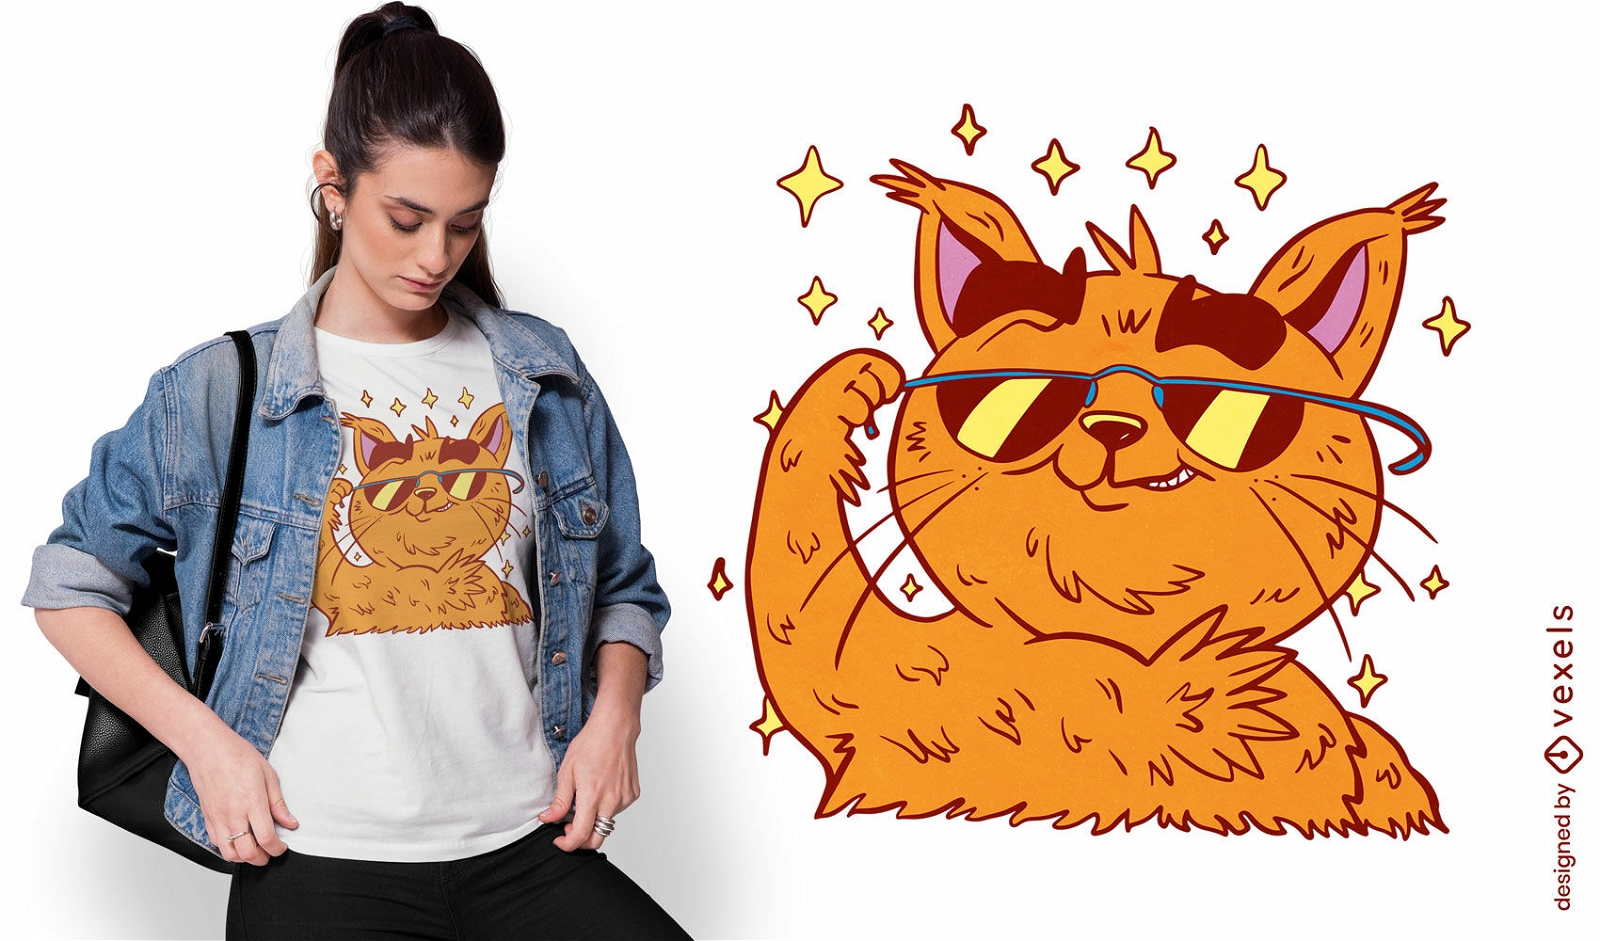 Cool cat character t-shirt design